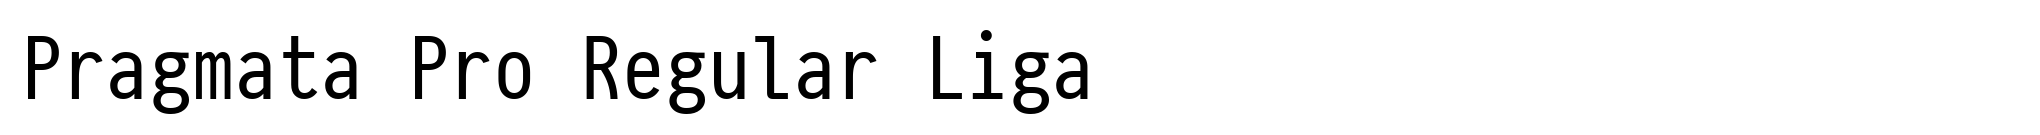 Pragmata Pro Regular Liga image